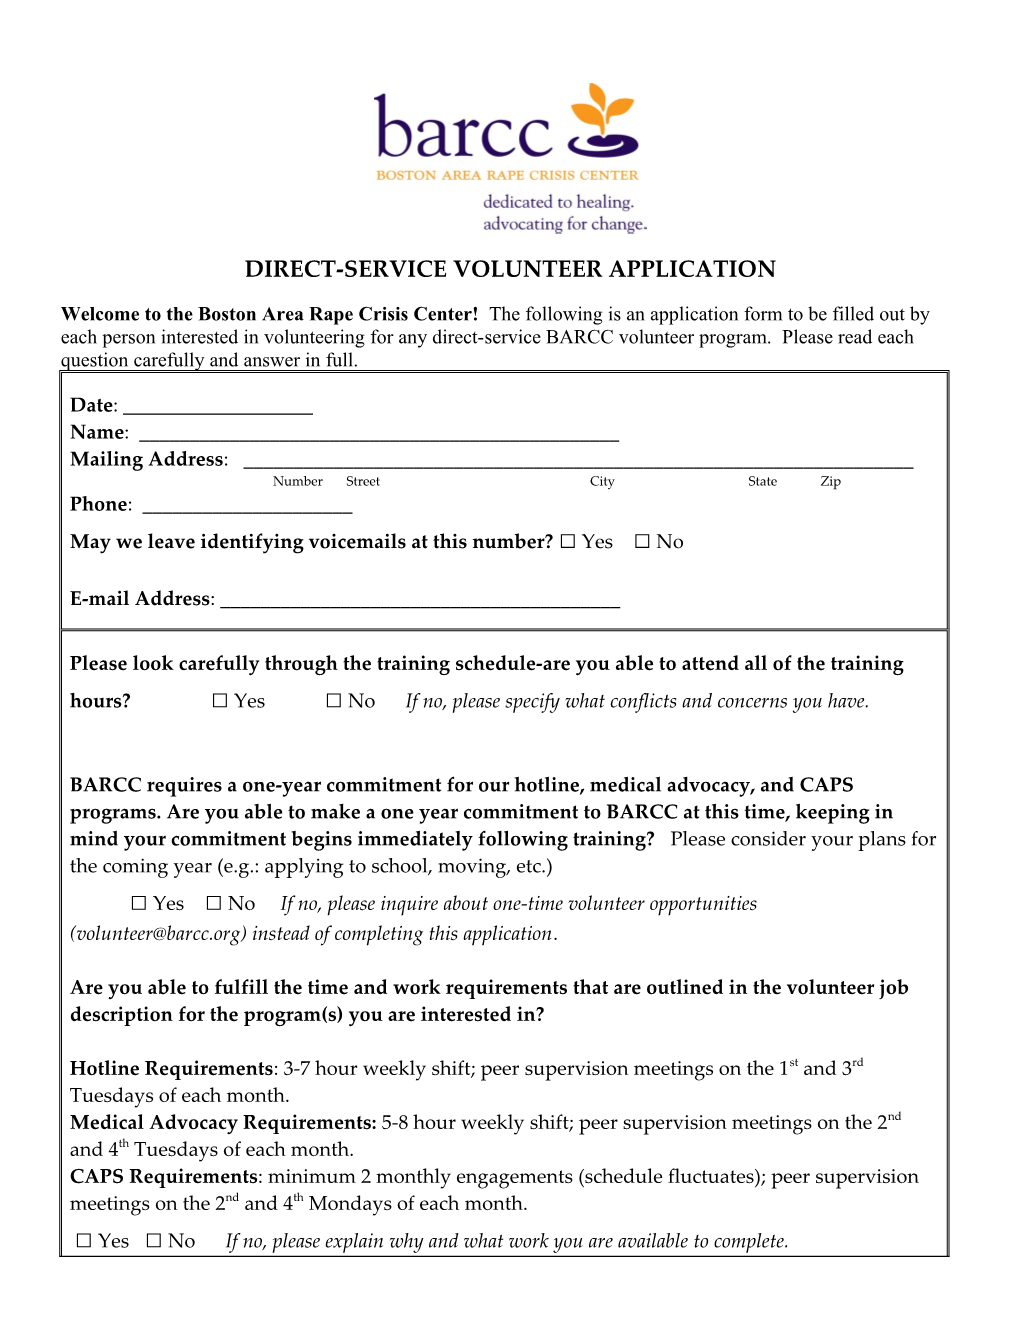 Direct-Service Volunteer Application